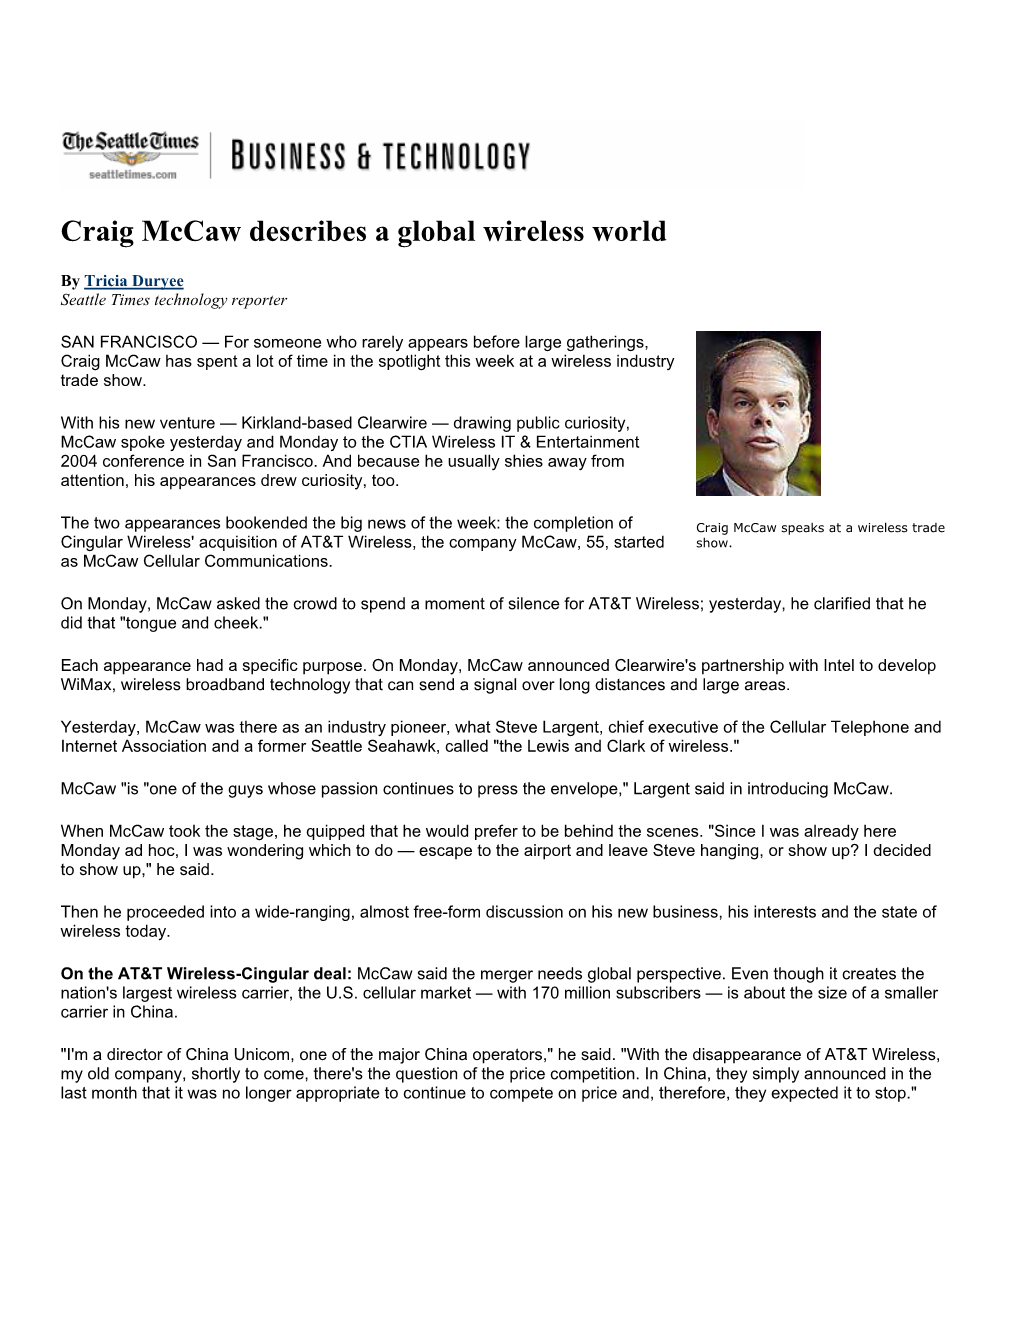 Craig Mccaw Describes a Global Wireless World